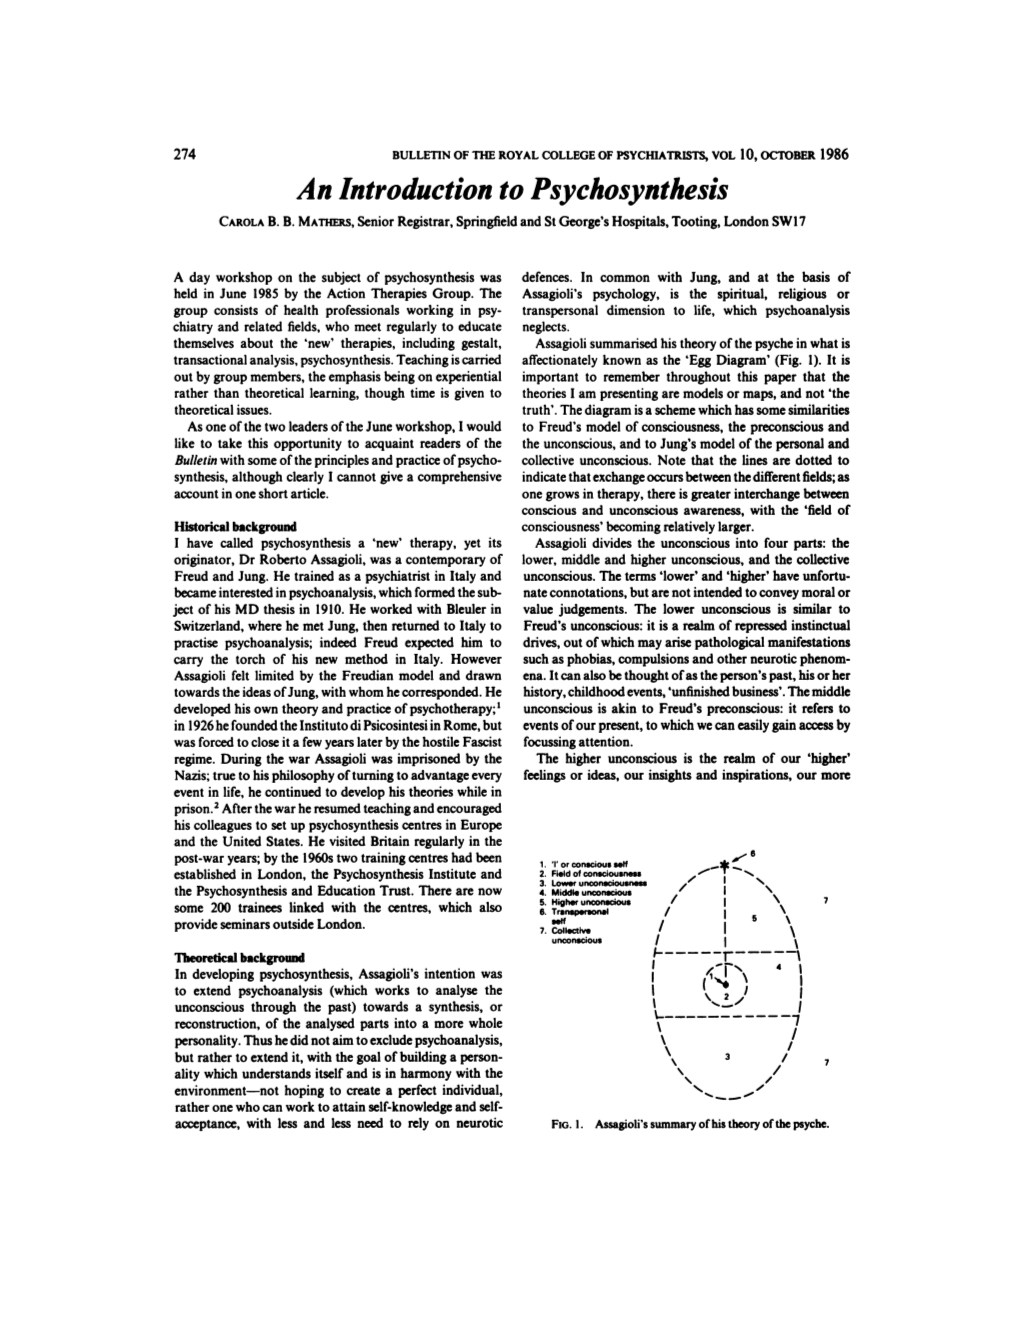 An Introduction to Psychosynthesis CAROLAB.B